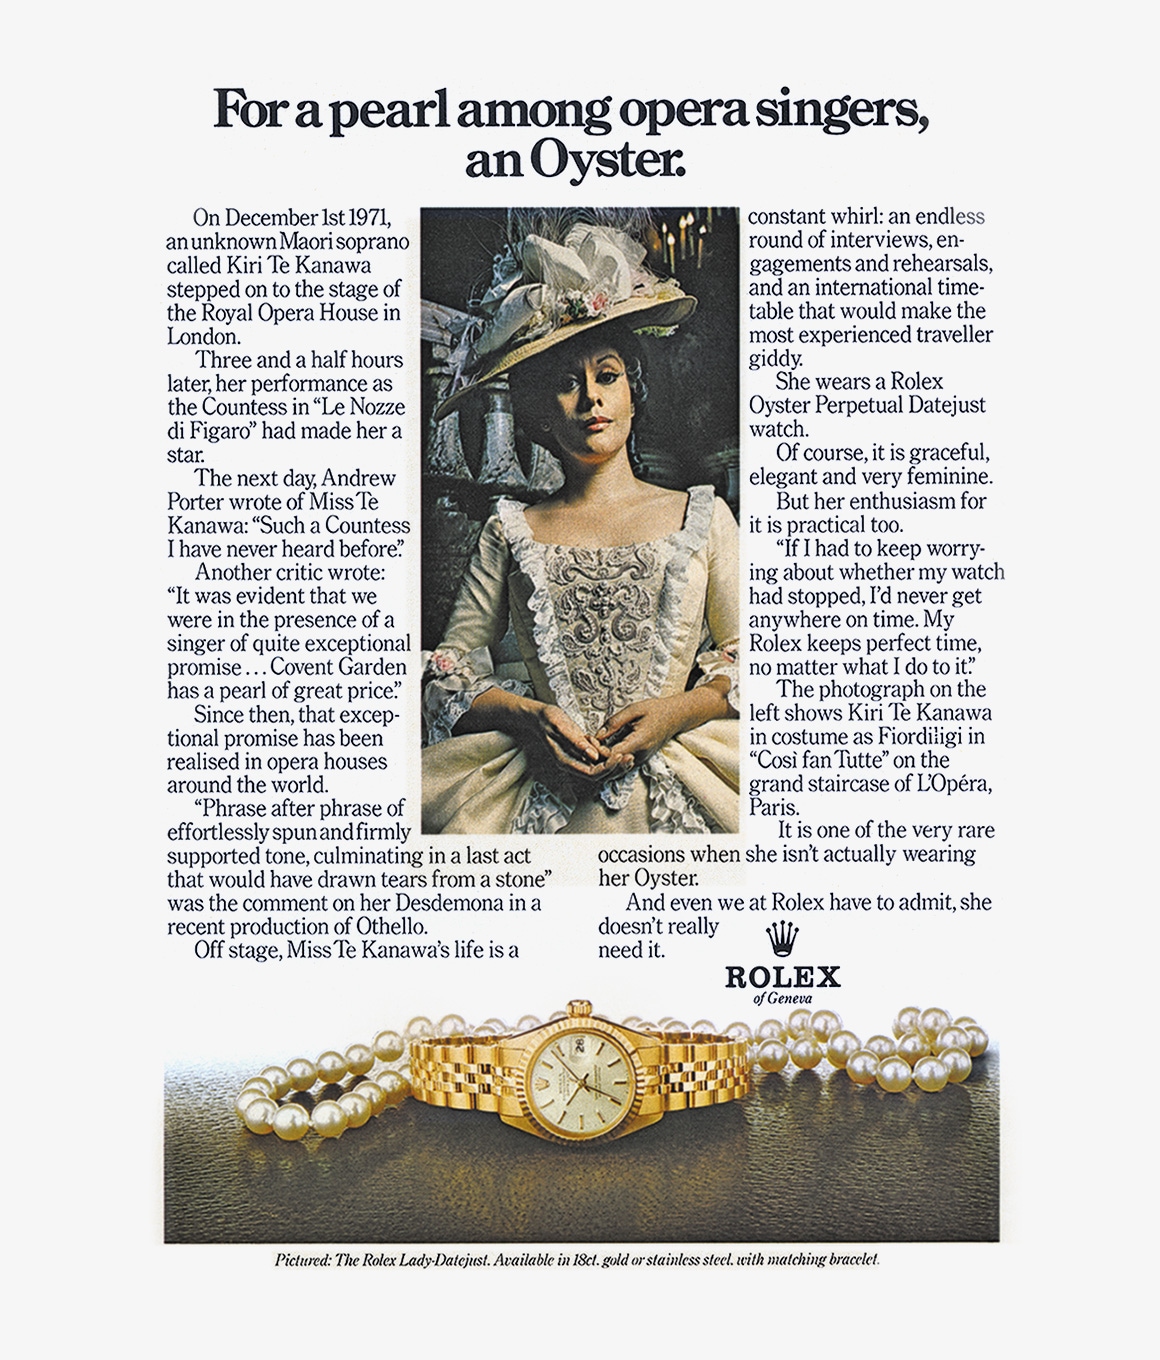 Rolex Day Date Oysterquartz 19018 18K Yellow Gold Diamond Dial Men's Watch